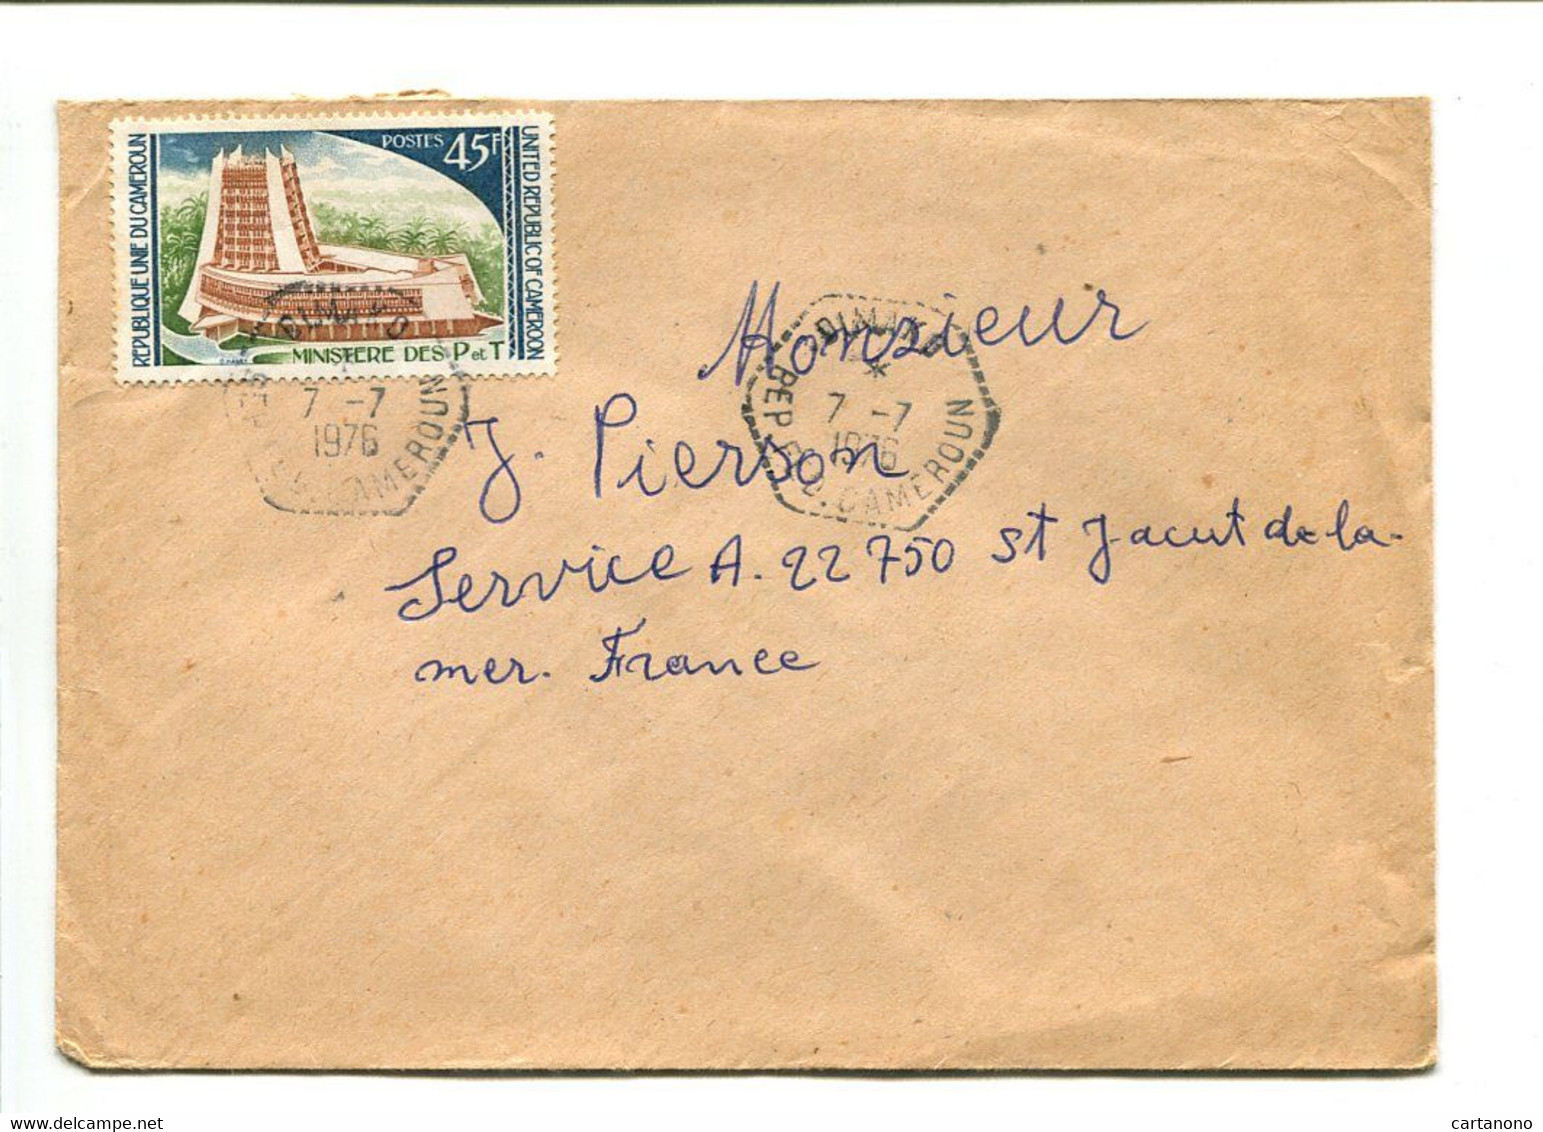 CAMEROUN Dimako1976  - Affranchissement Seul Sur Lettre - [cachet Perlé Hexagonal] - Camerun (1960-...)